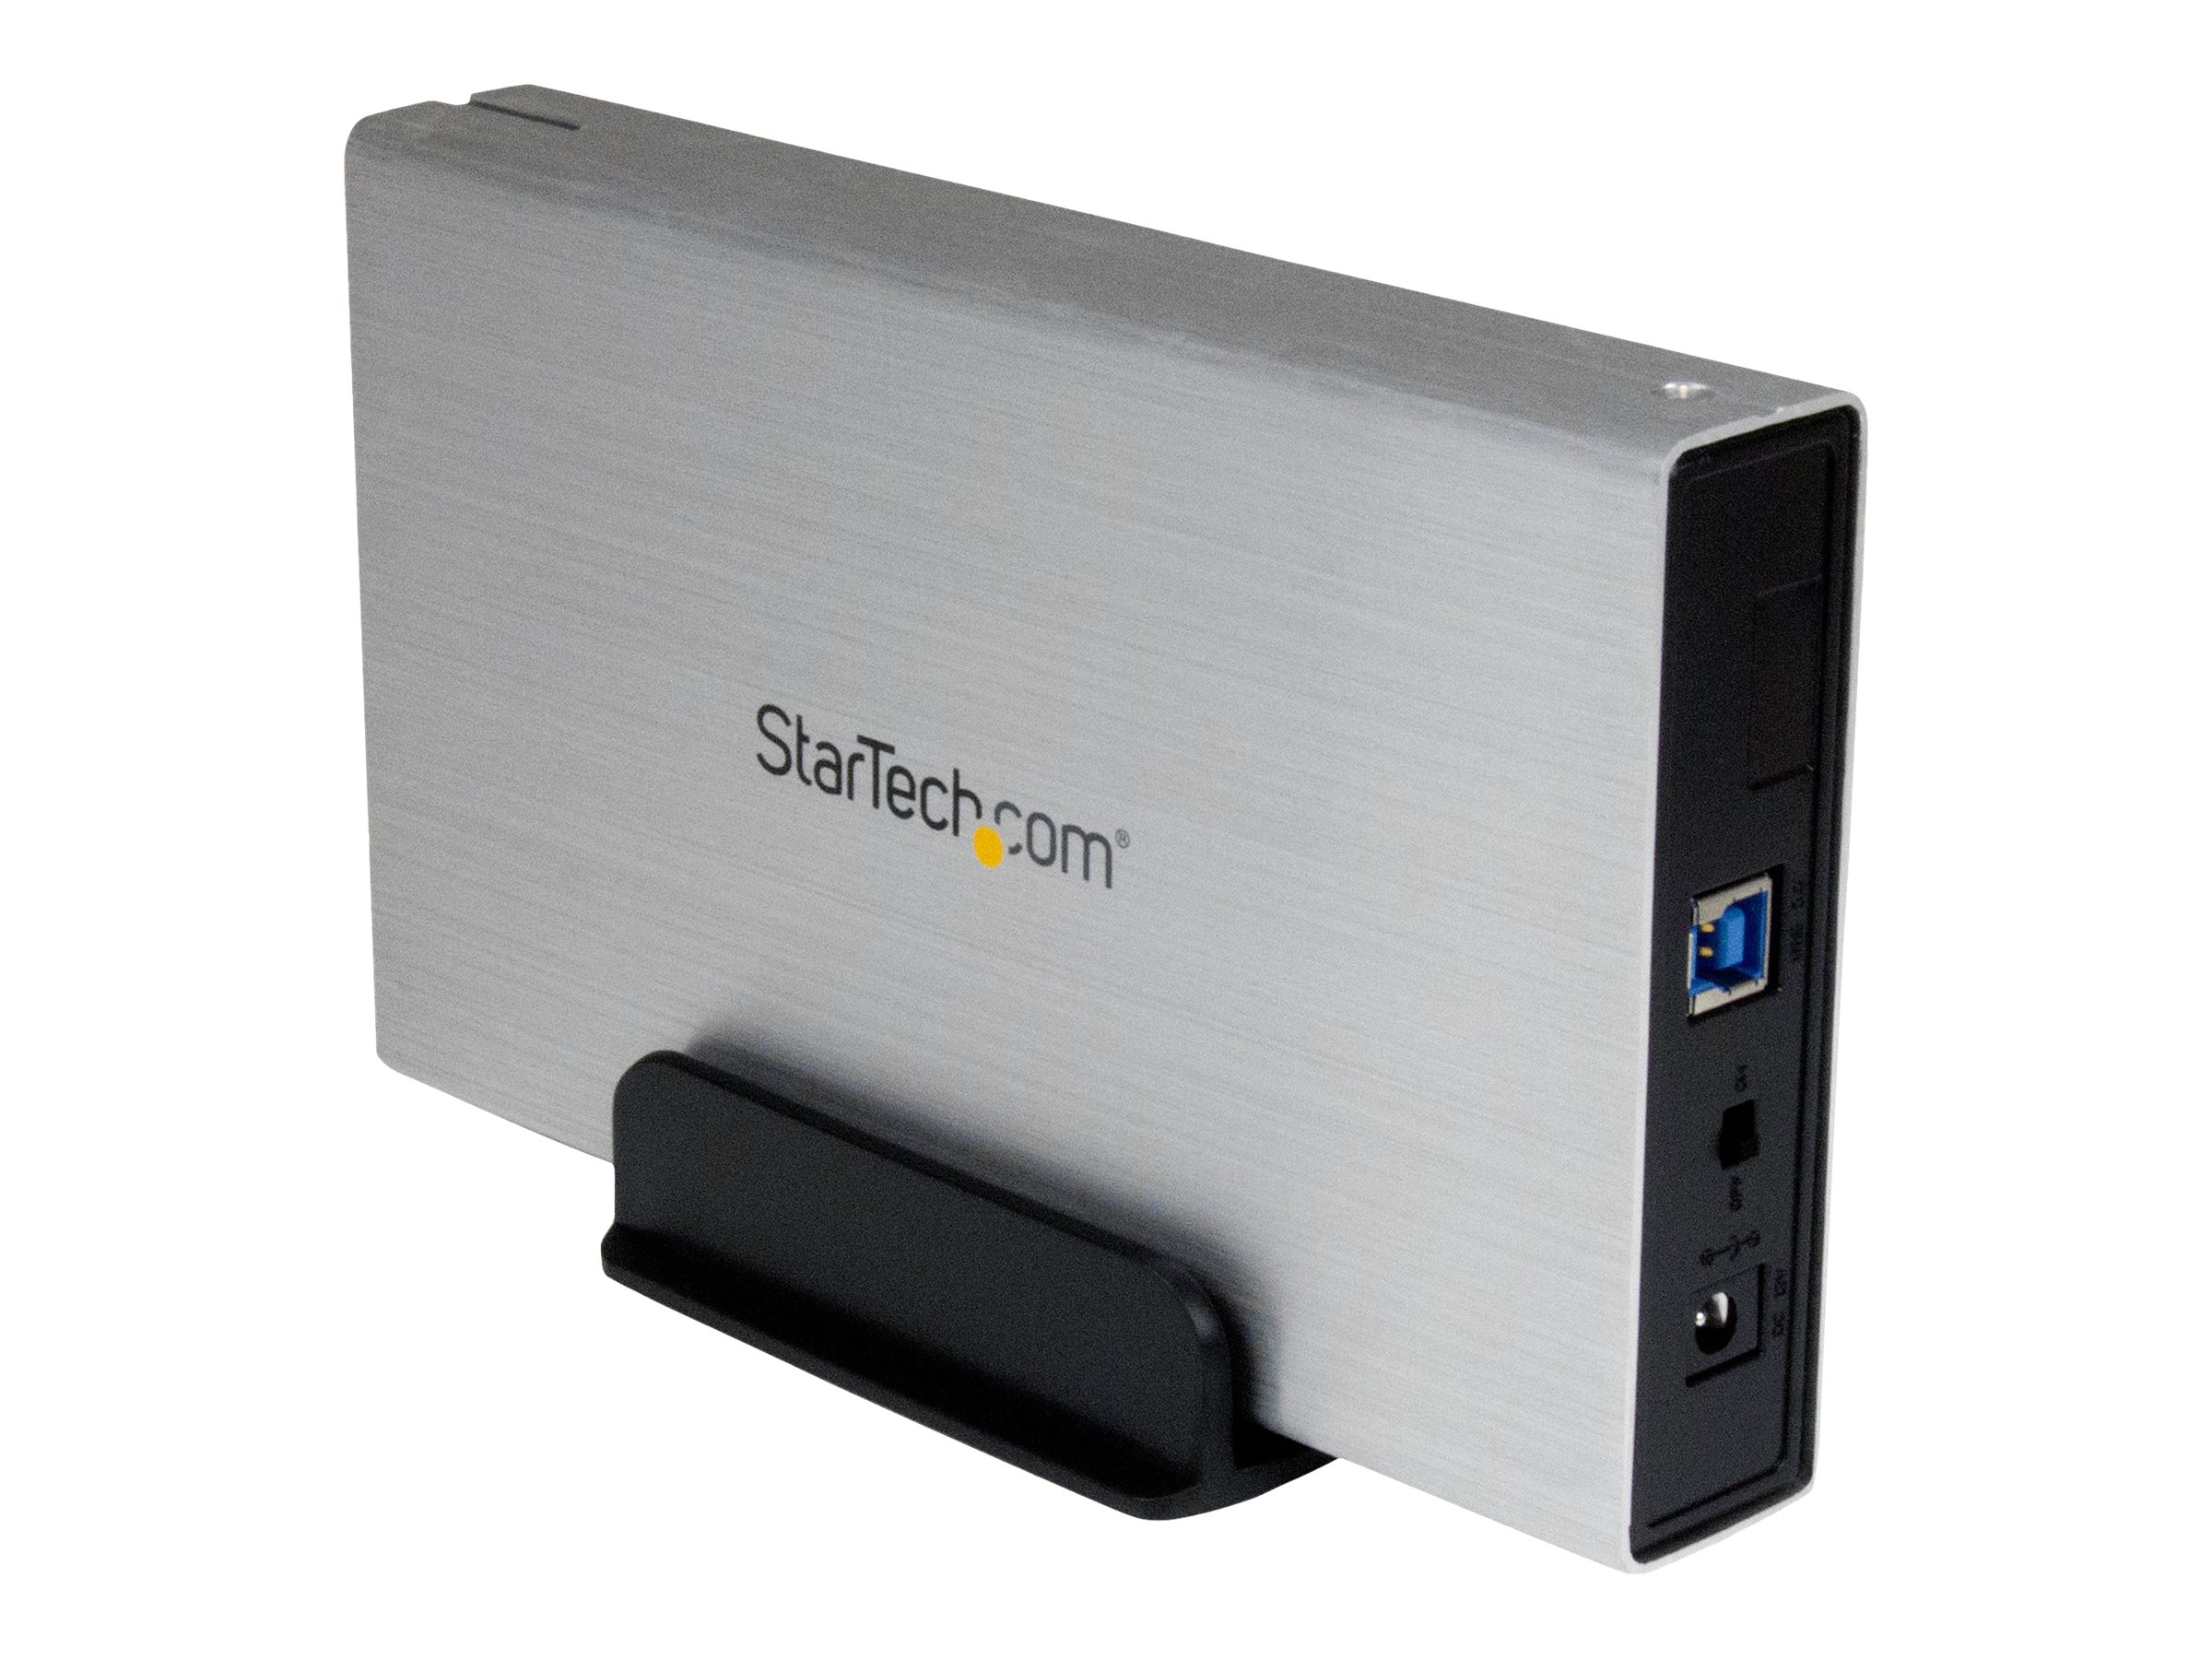 StarTech.com Externes 3,5 SATA III SSD USB 3.0 SuperSpeed Festplattengehuse mit UASP - 3,5 Zoll (8,9cm) HDD Gehuse aus Alumini